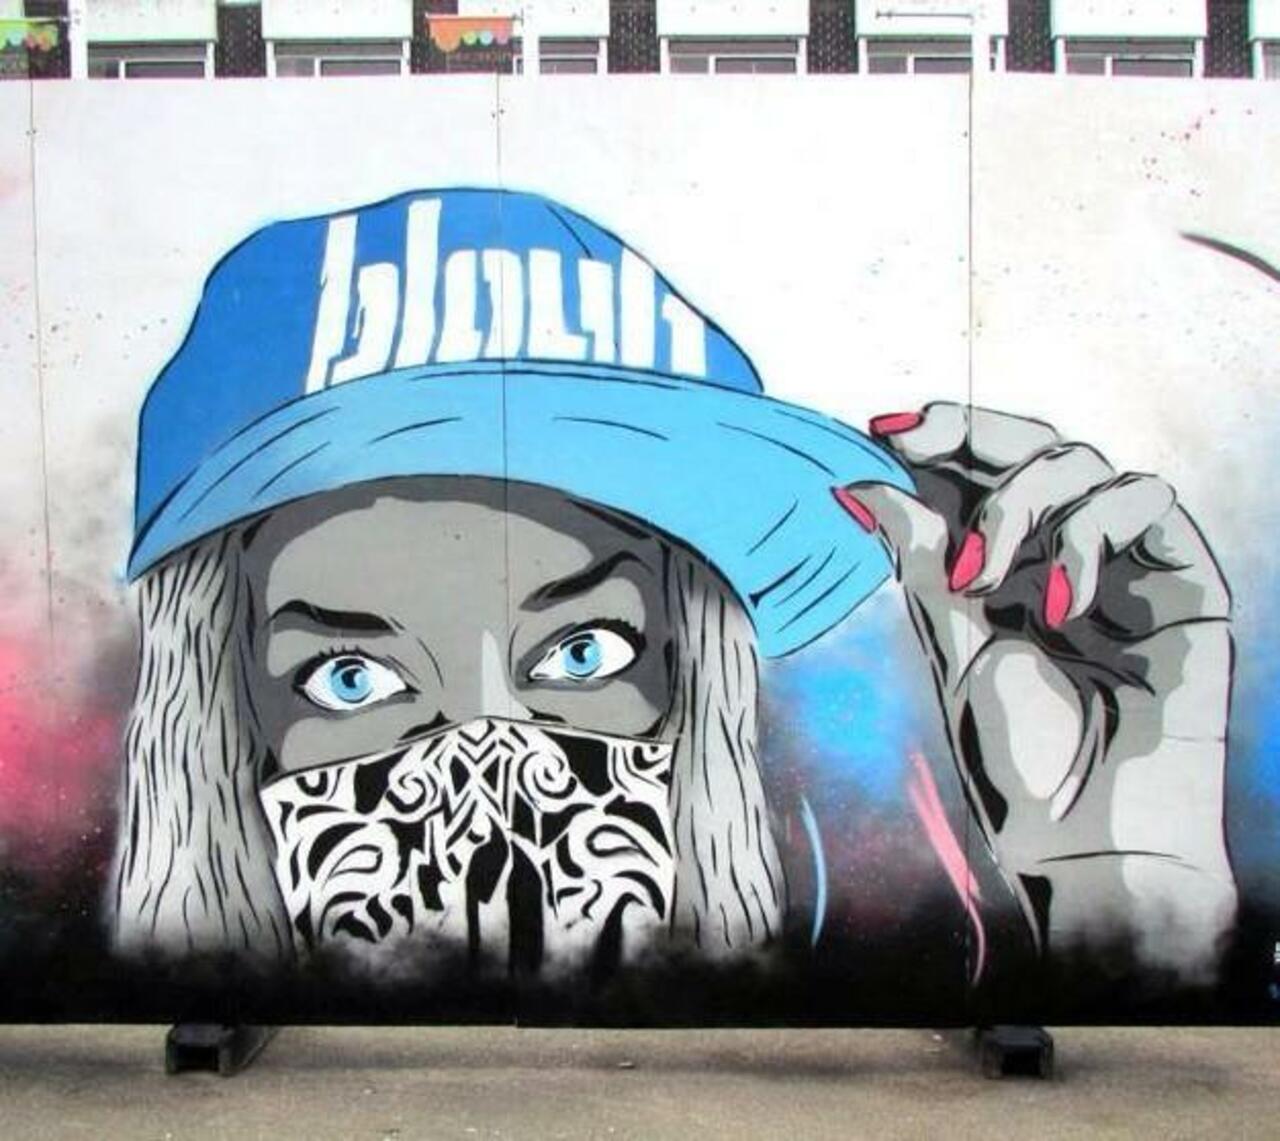 Artist Blouh at the Glouchester Paint Jamb, London, UK #art #mural #graffiti #streetart http://t.co/WJErqoaAIm